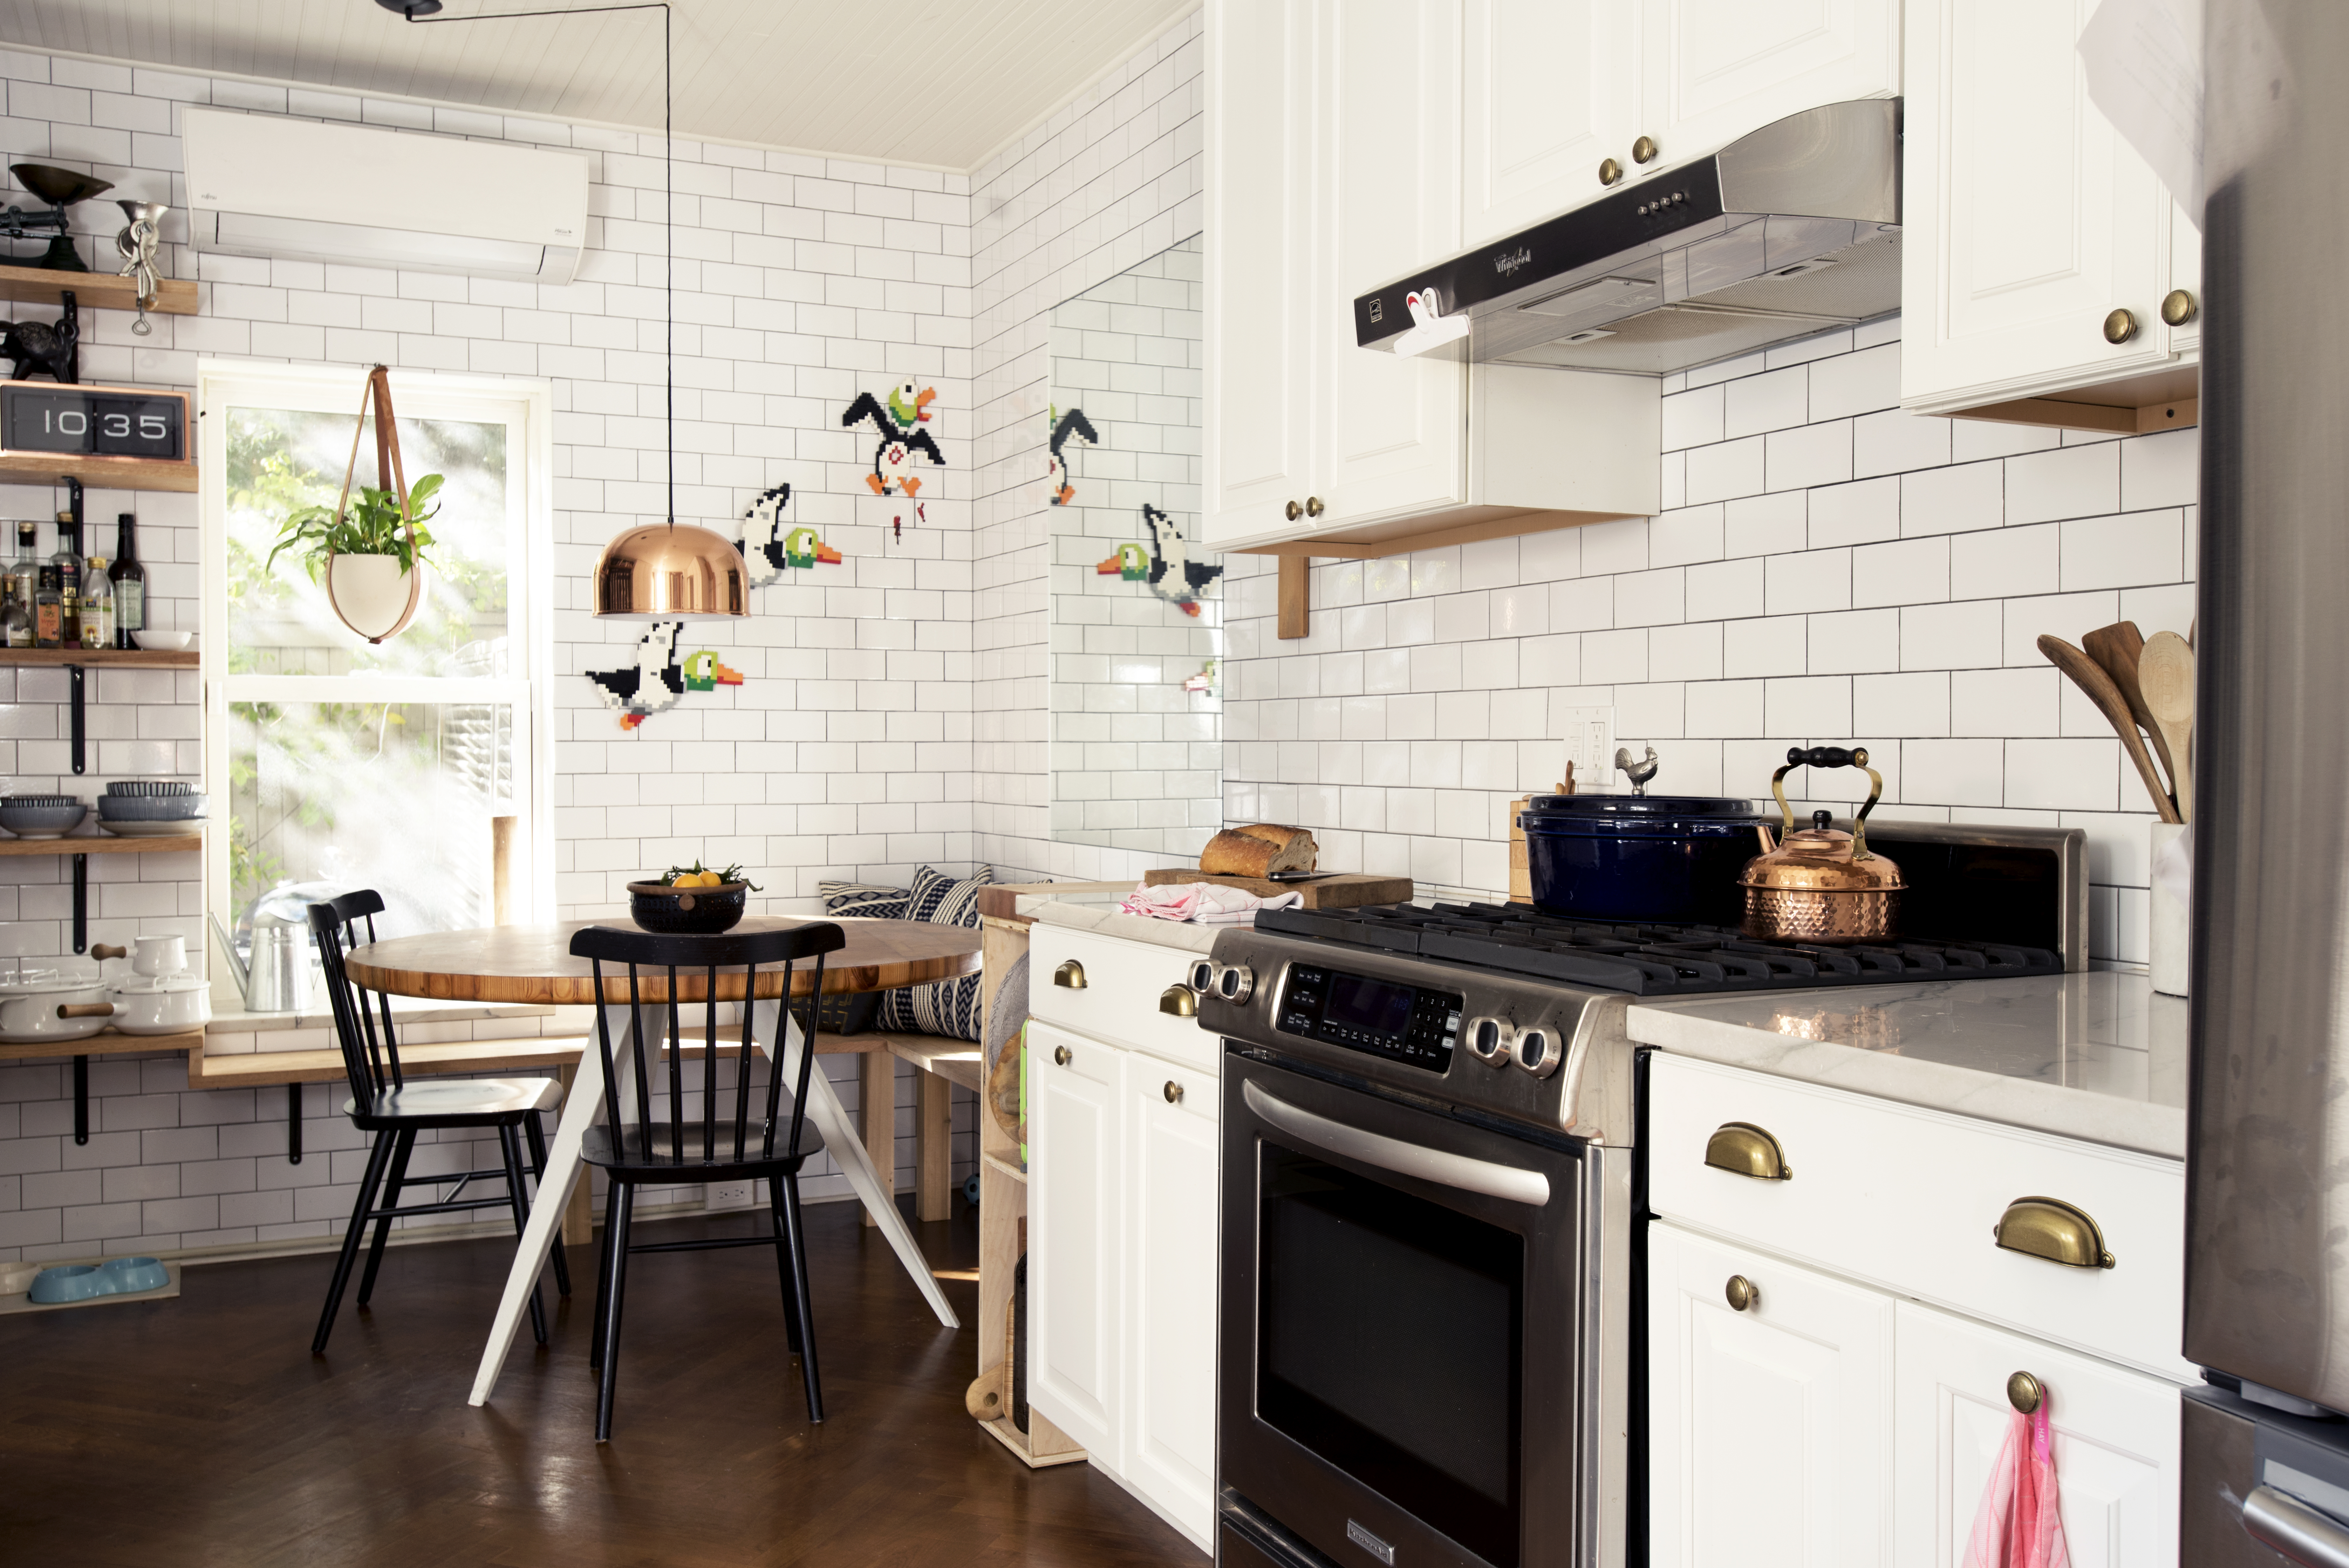 18 Beautiful White Kitchen Ideas   Design & Decorating Tips ...